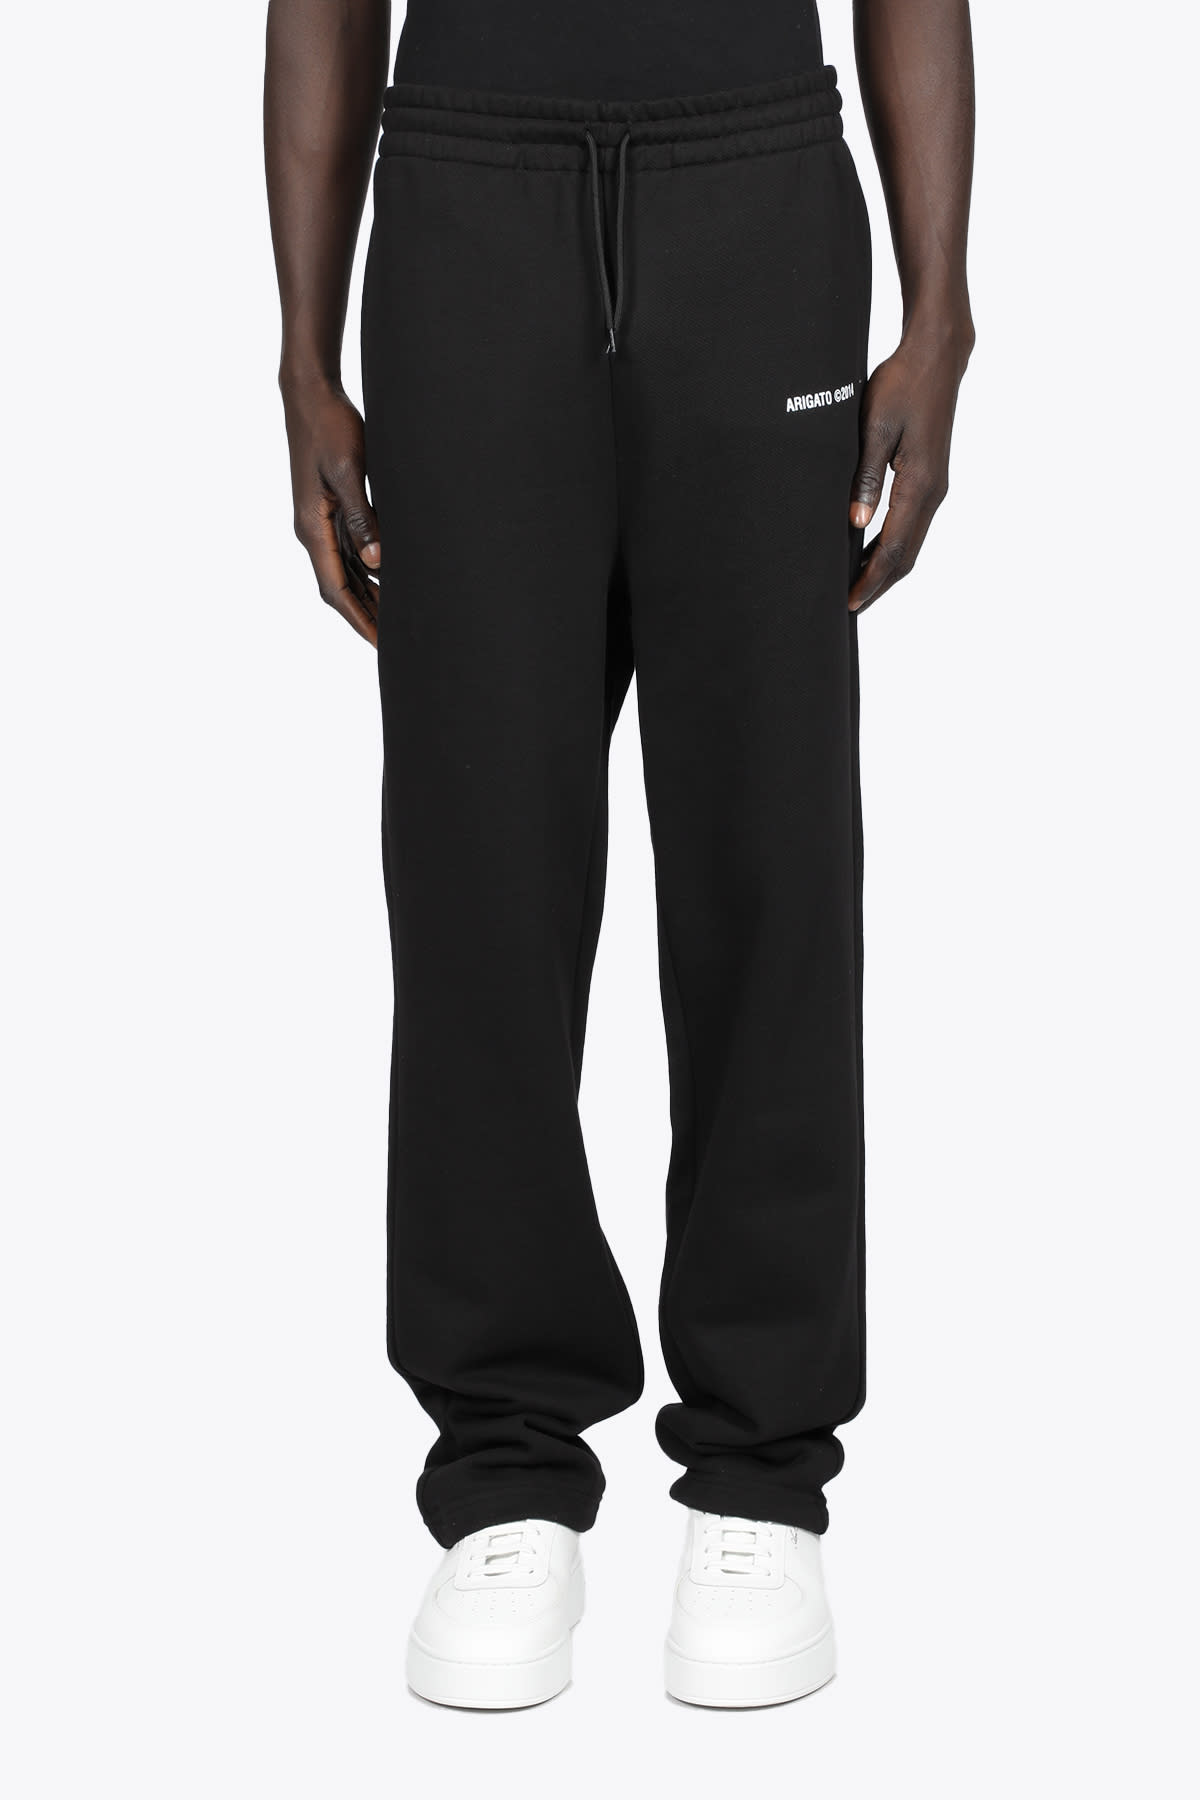 Axel Arigato London Sweatpants Black cotton joggers with logo